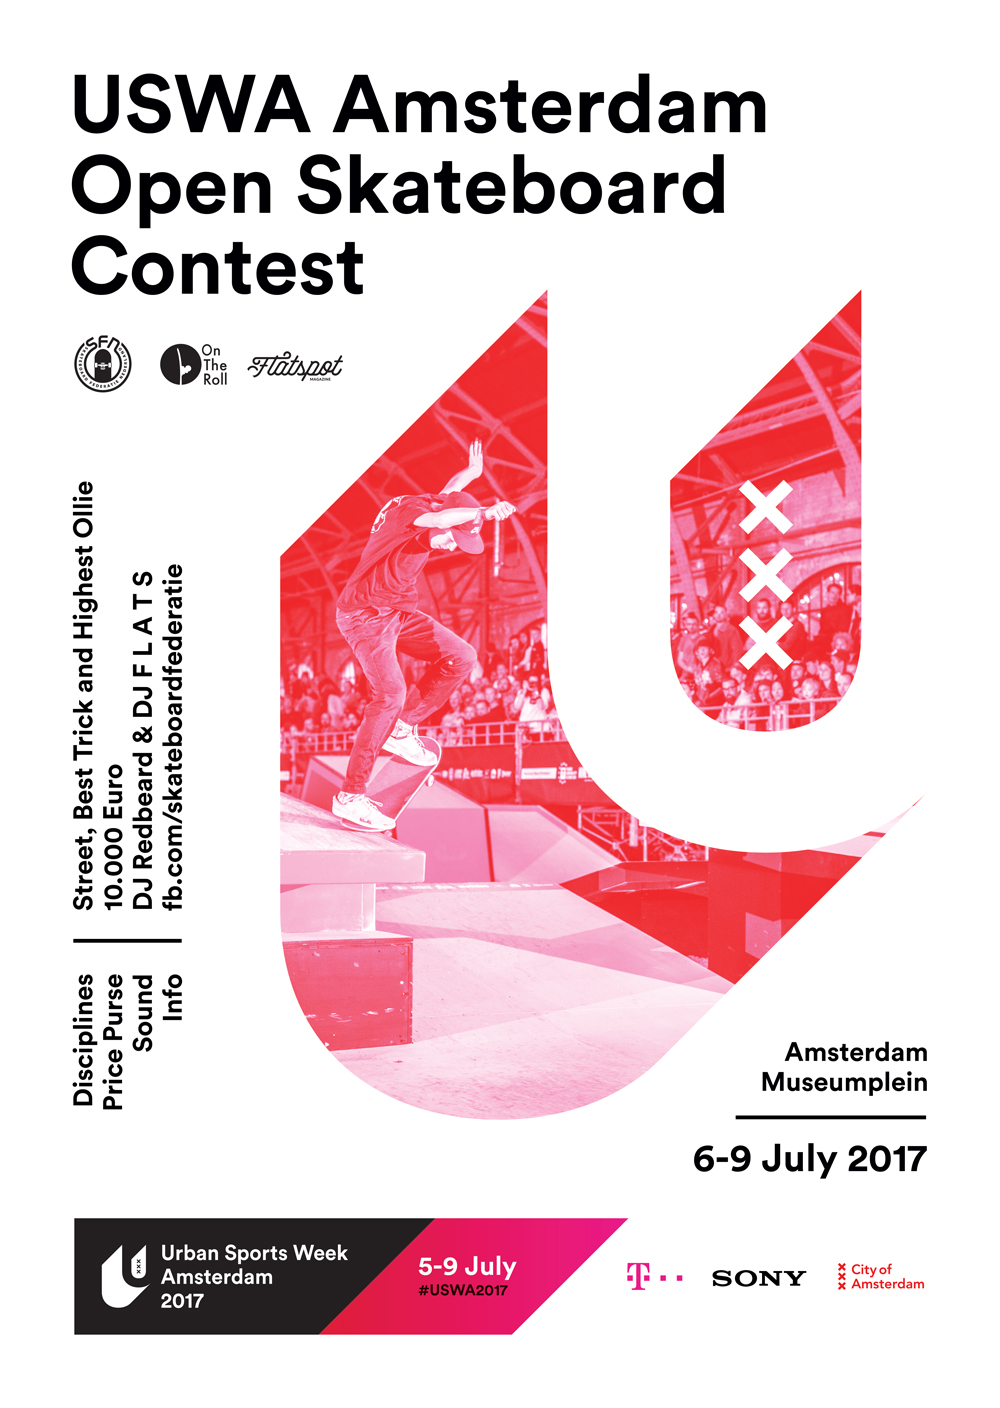 USWA Amsterdam Open Skateboard Contest 2017 on Urban Sports Week Amsterdam